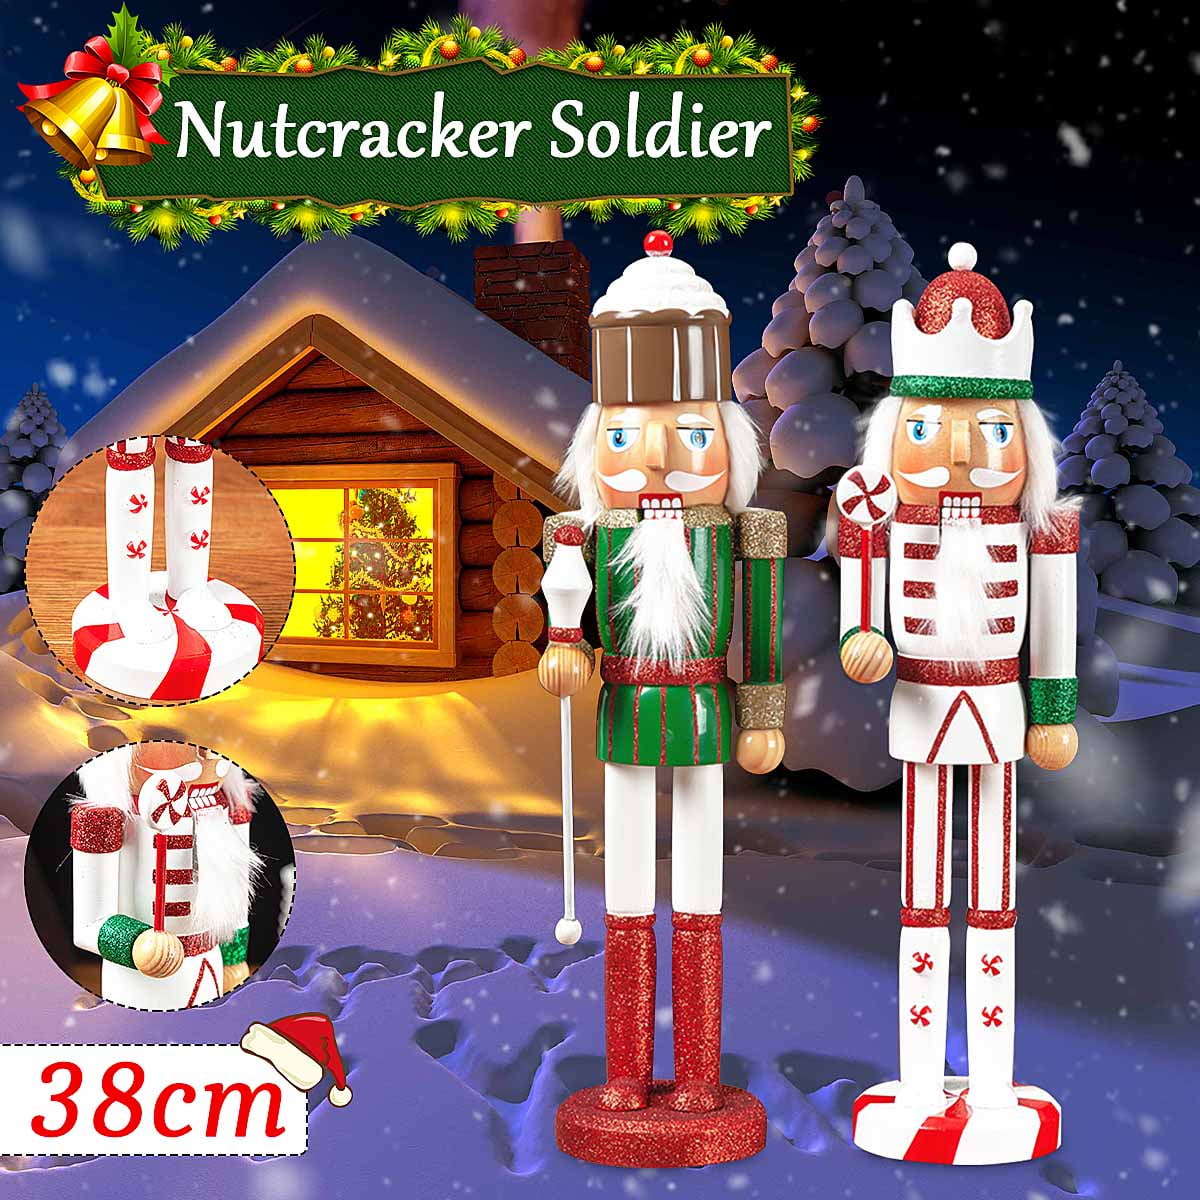 nutcracker soldier christmas decoration